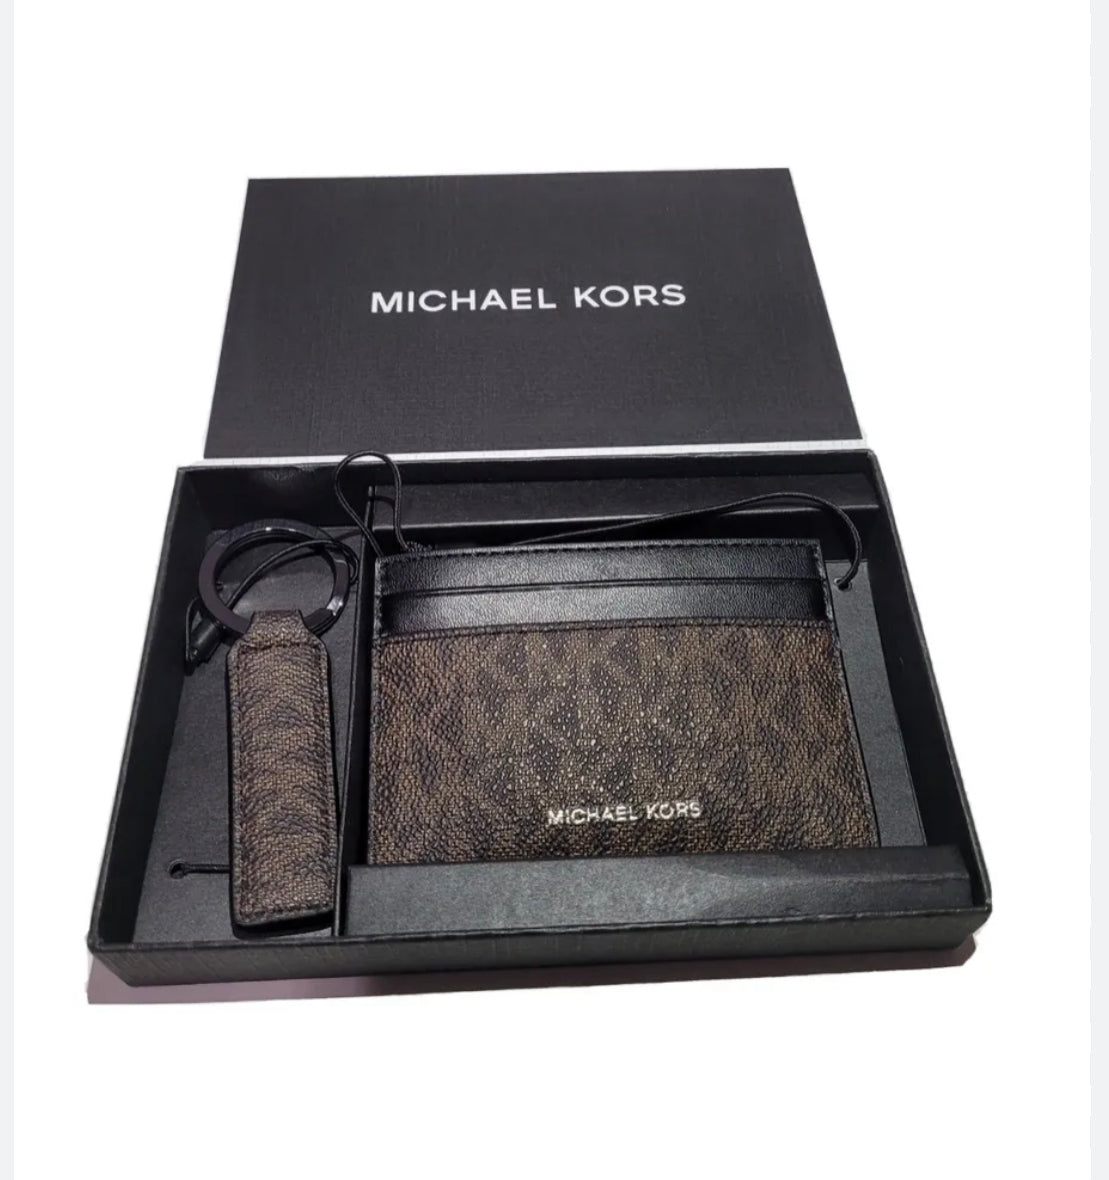 Michael kors  card holder & keychain set